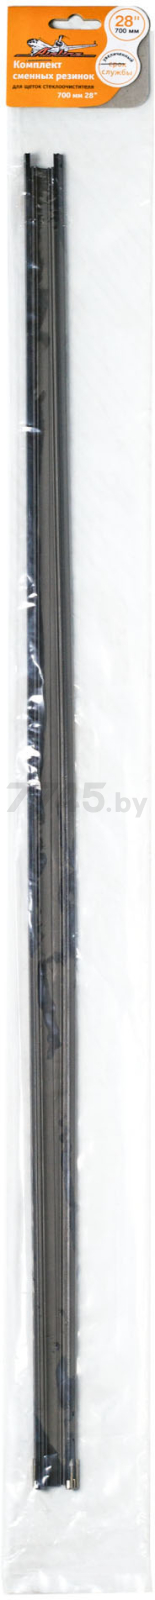 Резинка стеклоочистителя 700 мм AIRLINE 2 штуки (B-RE-700K) - Фото 2